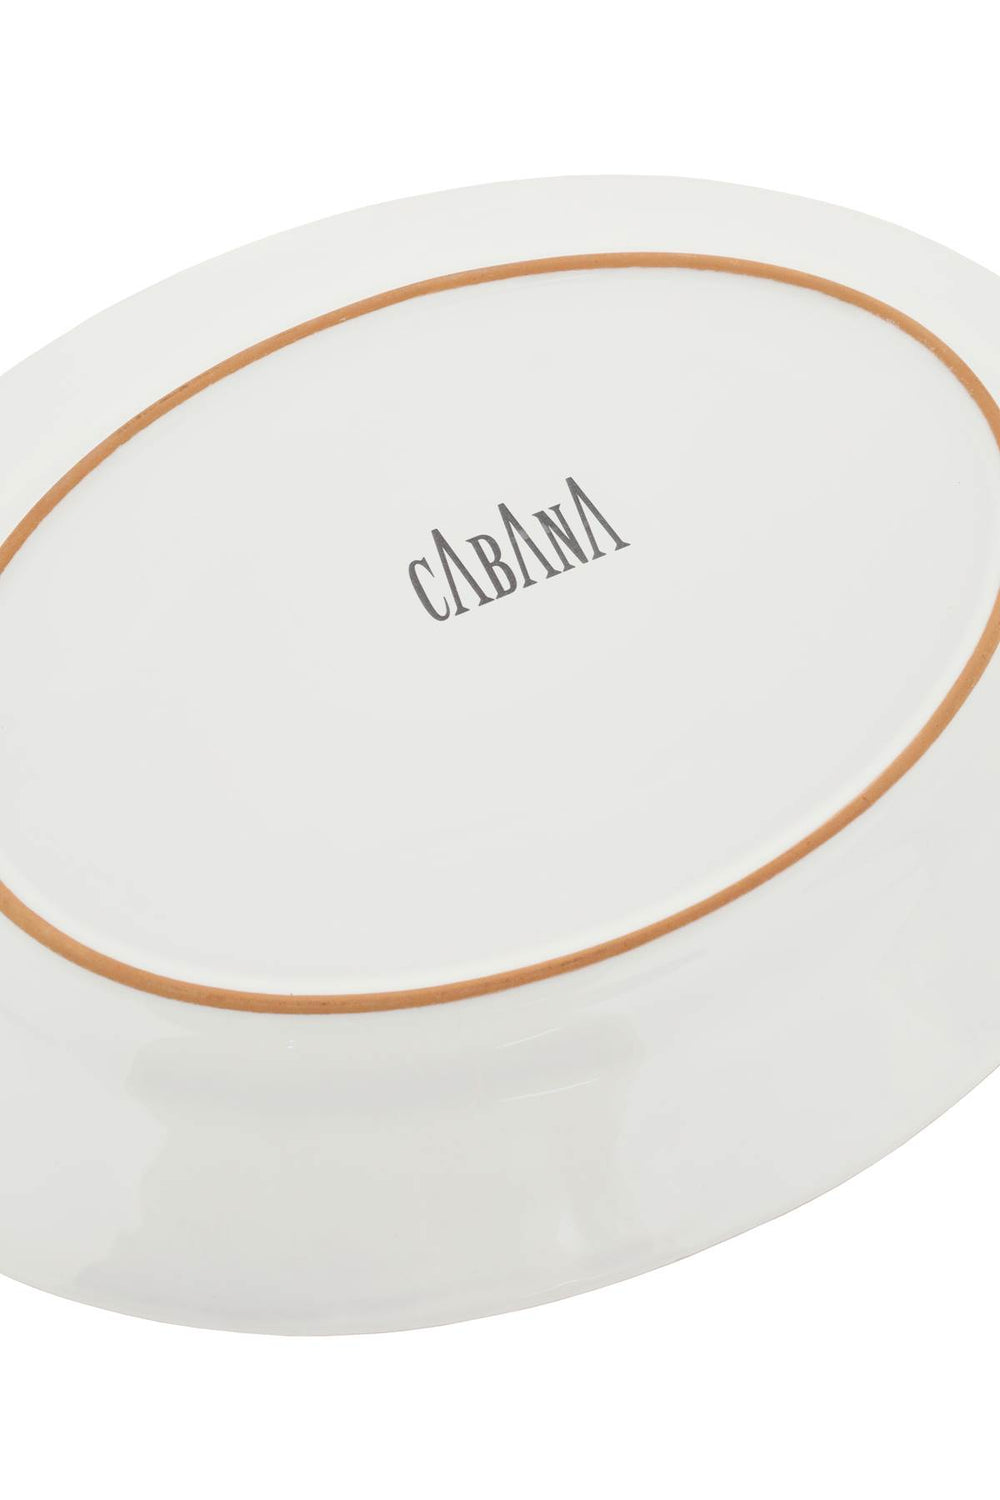 Cabana blossom oval serving plate-1